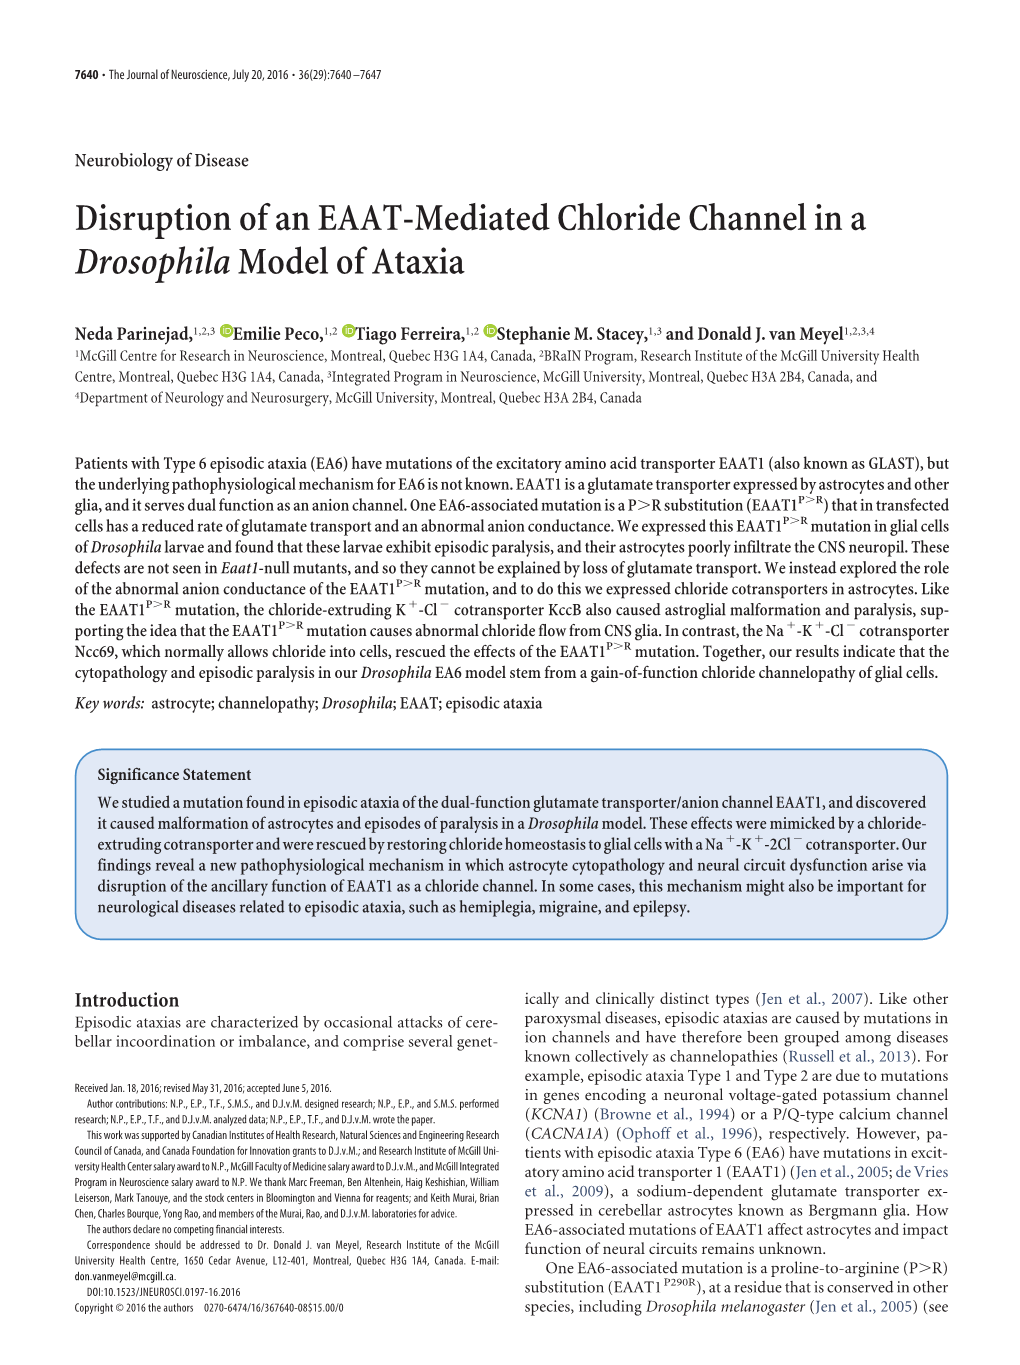 Disruption of an EAAT-Mediated Chloride Channel in a Drosophila Model of Ataxia